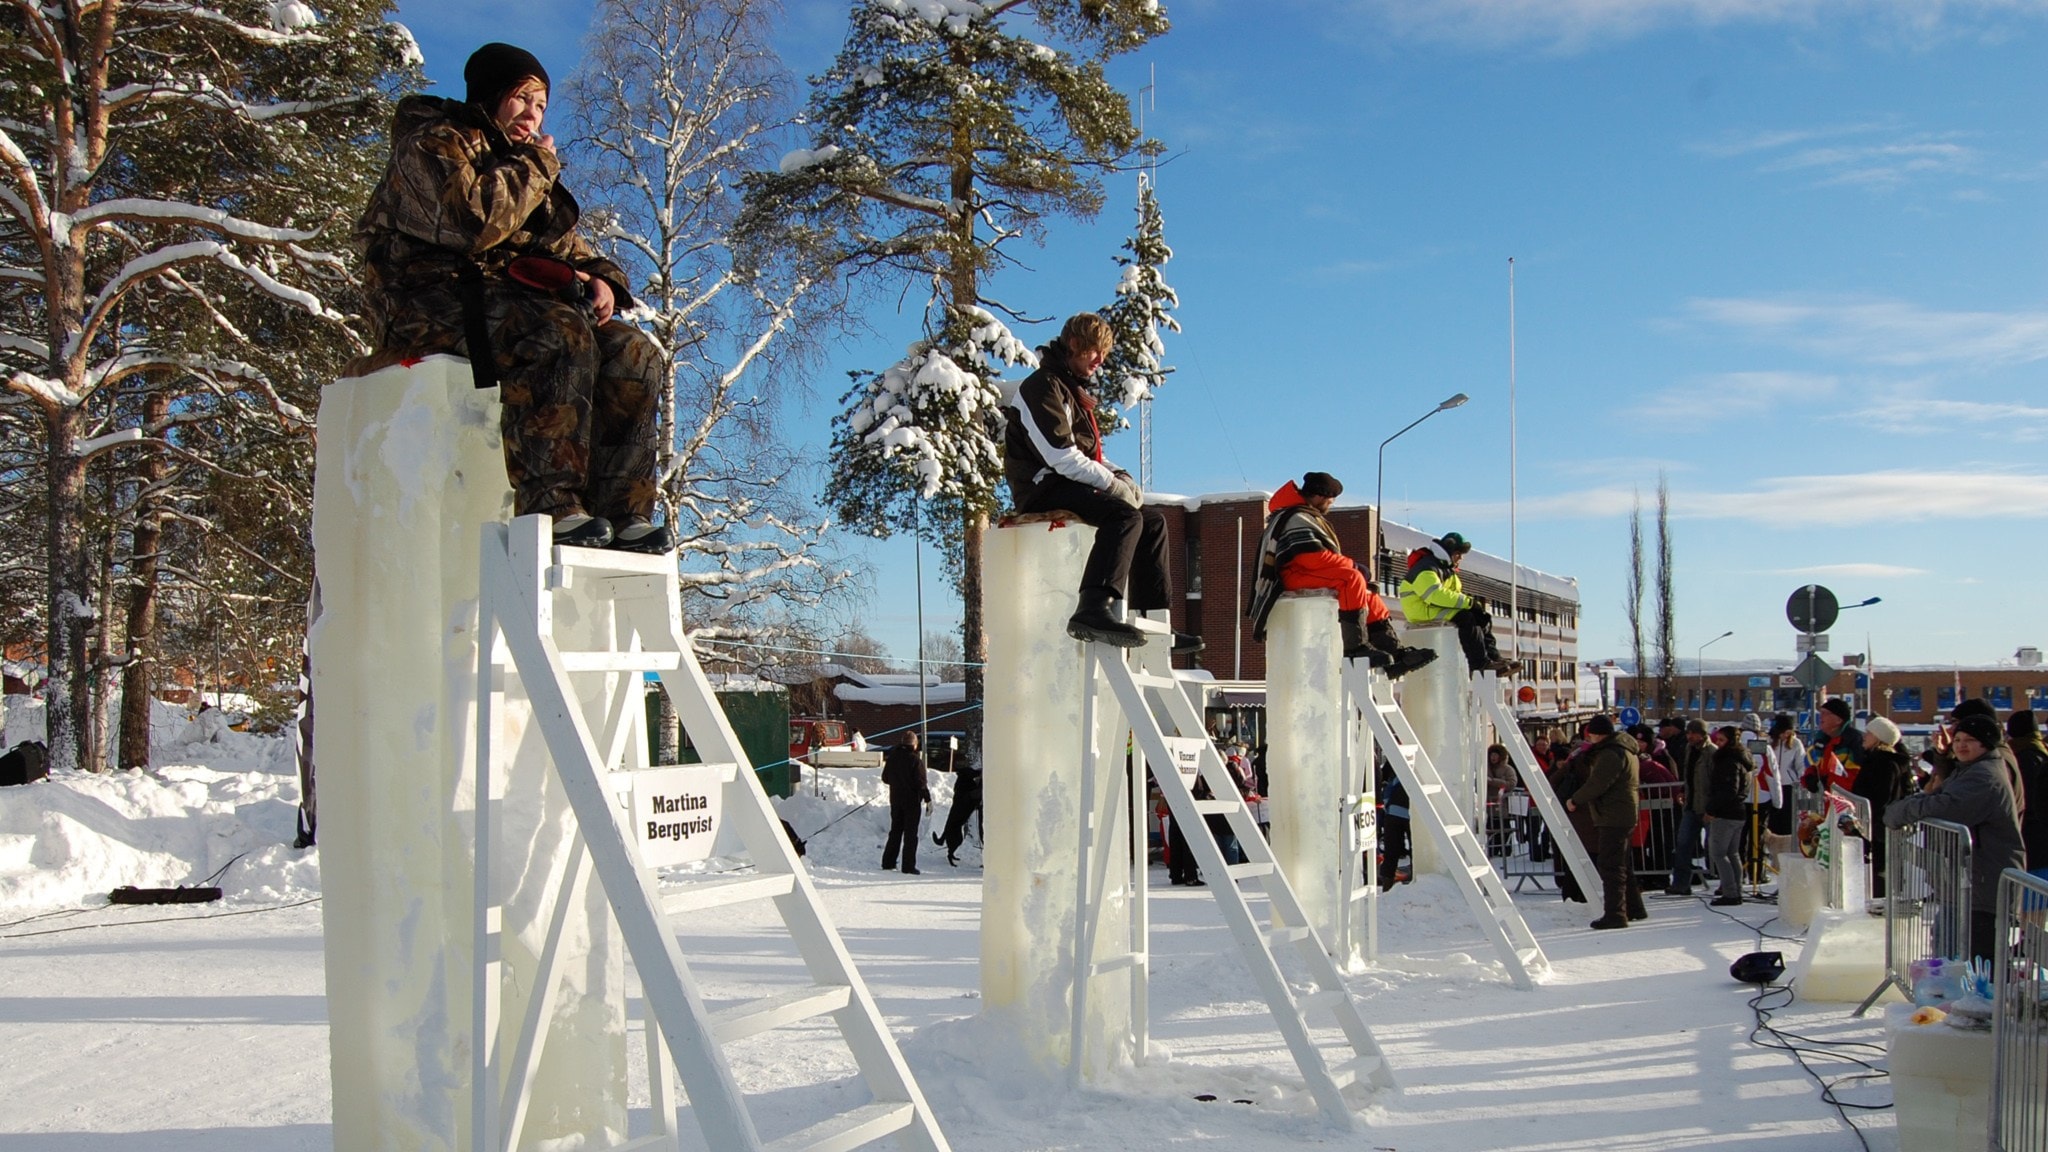 Isstolpsittning ili sjedenje na ledu takmičarska je aktivnost po kojoj je postao popularan švedski grad Vilhelmina ljudi sjede na ledenim stubovima dan sunce ledene merdevine